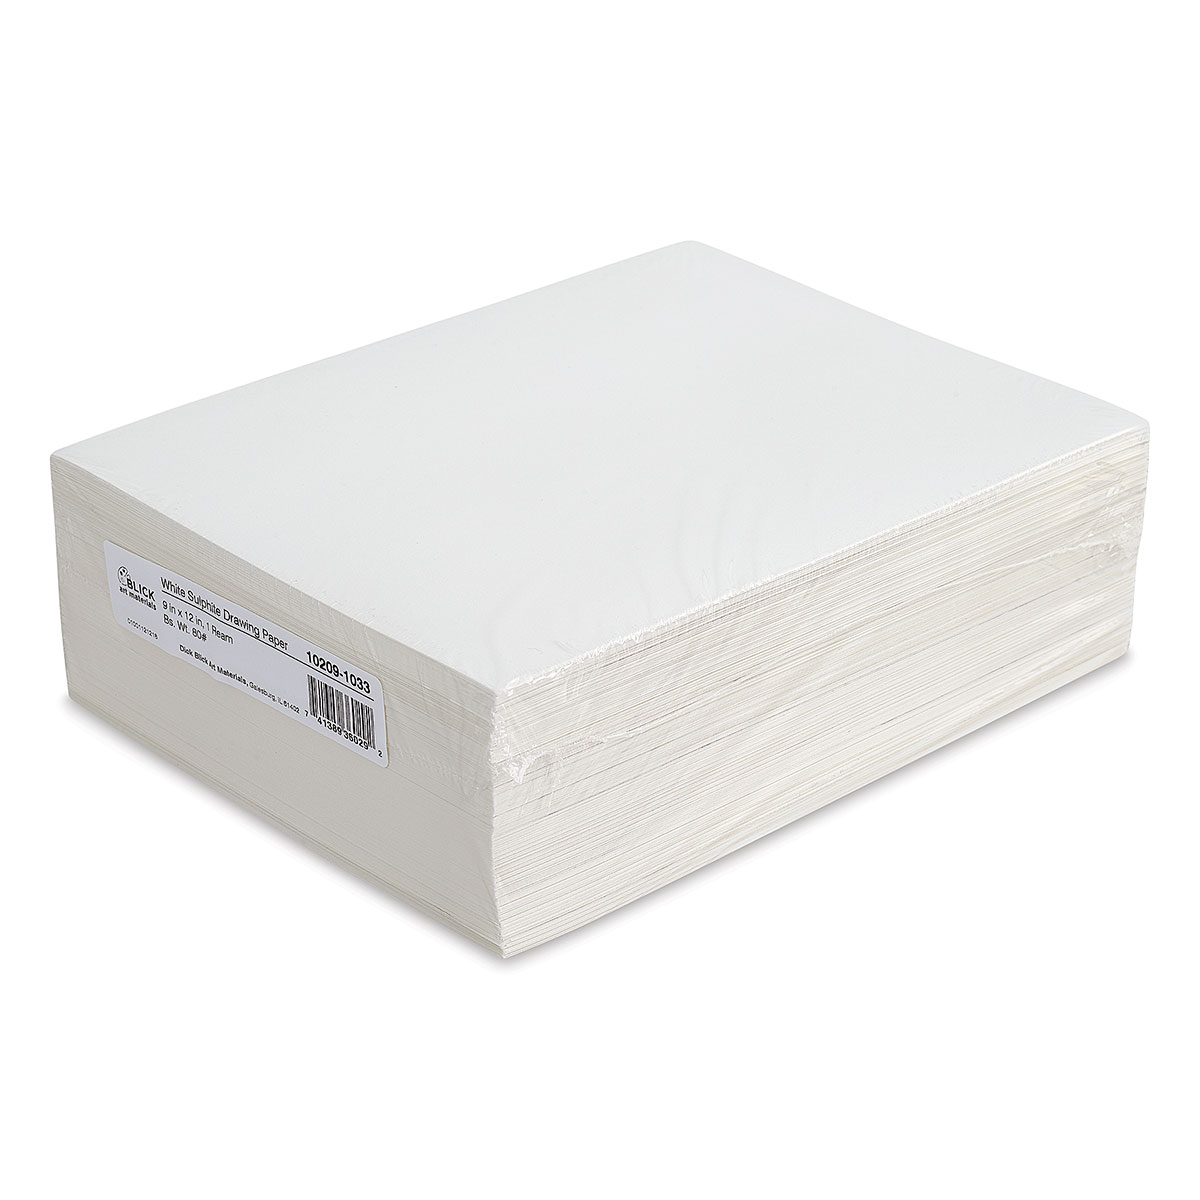 Sax 053943 Extra White Sulphite Drawing Paper 80 lb 9 X 12 500